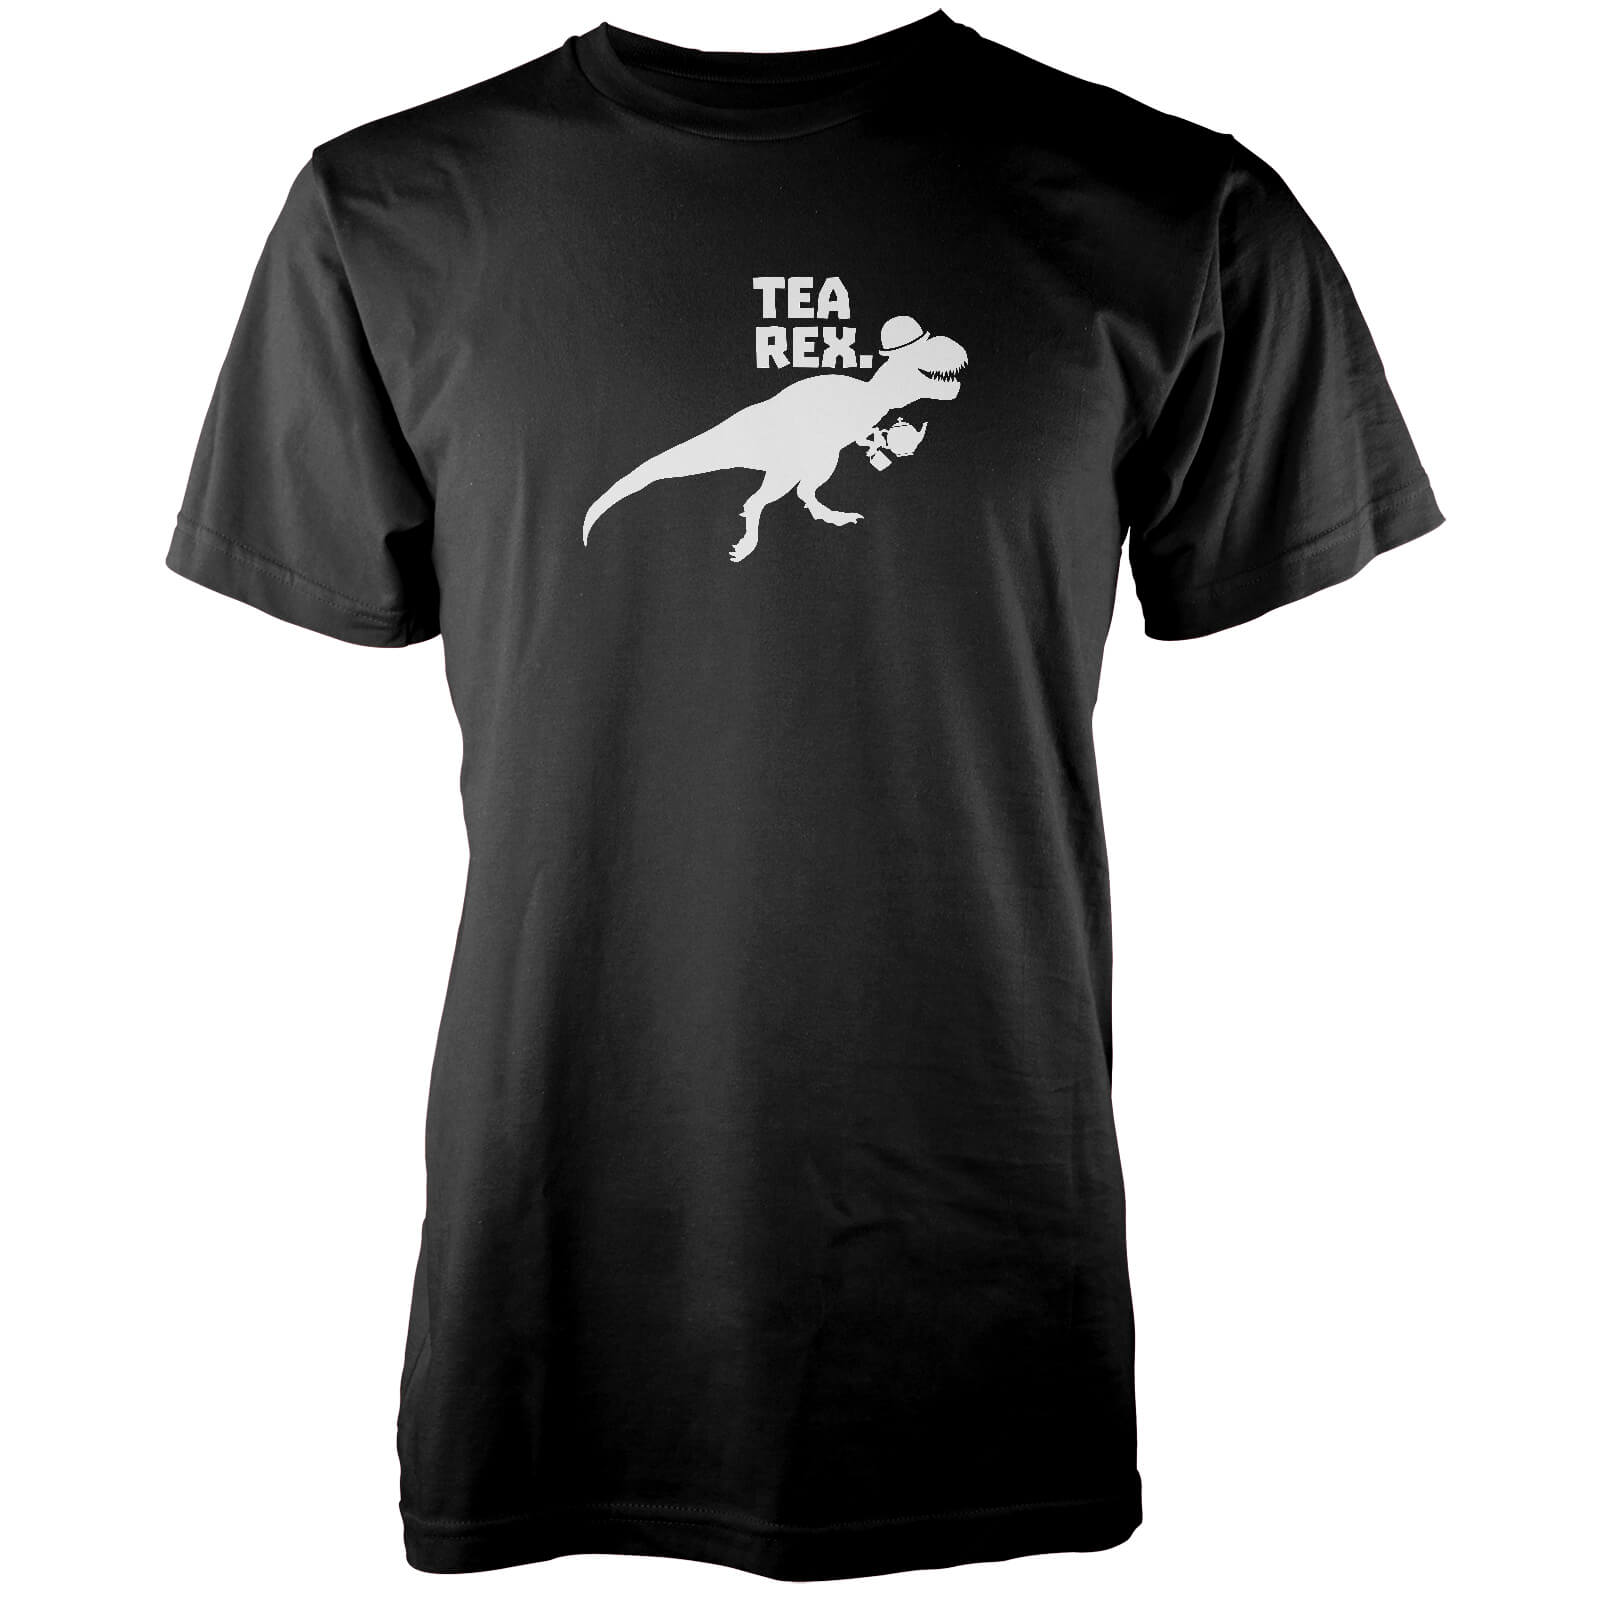 Tea Rex Black T-Shirt - S - Black